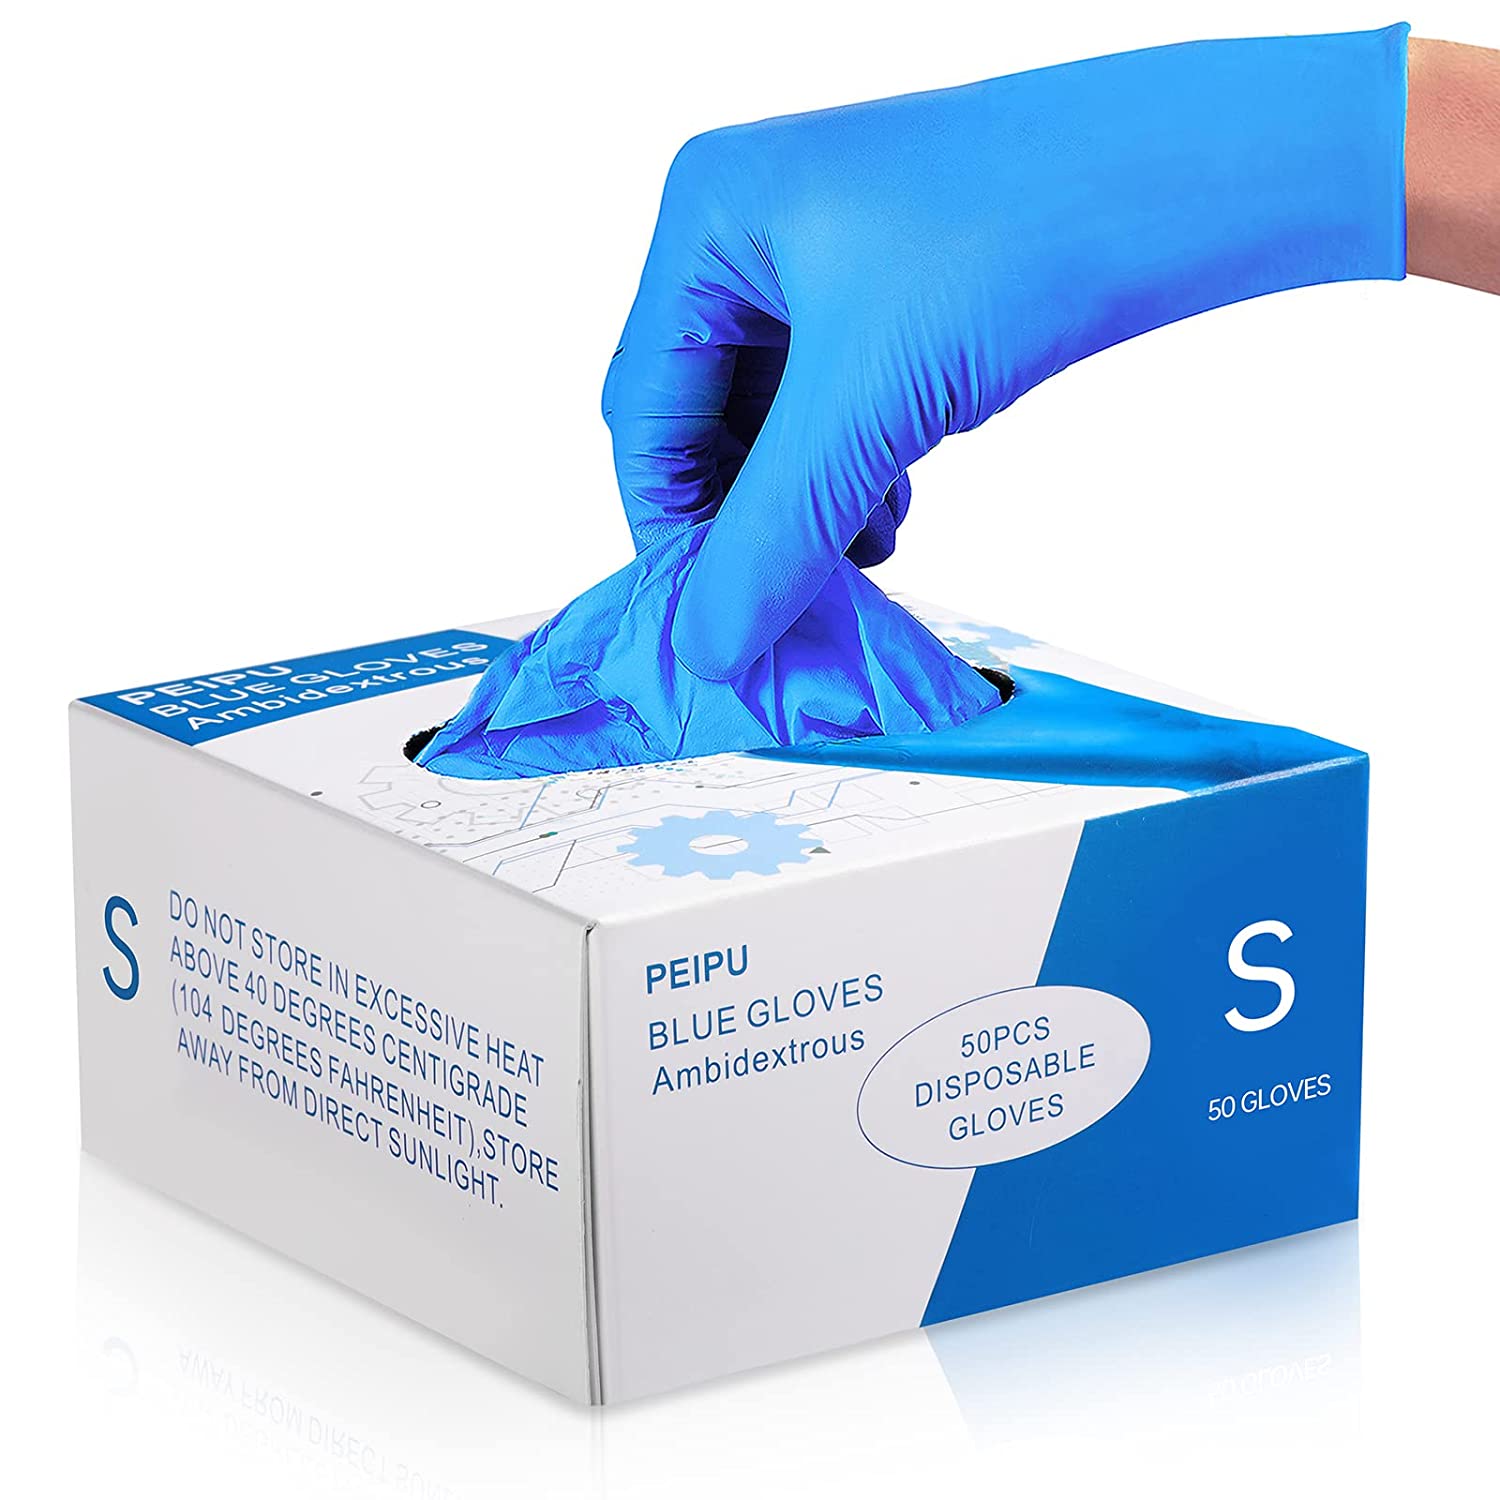 PEIPU Touch Sensitive Anti-Tear Disposable Gloves, 50-Count